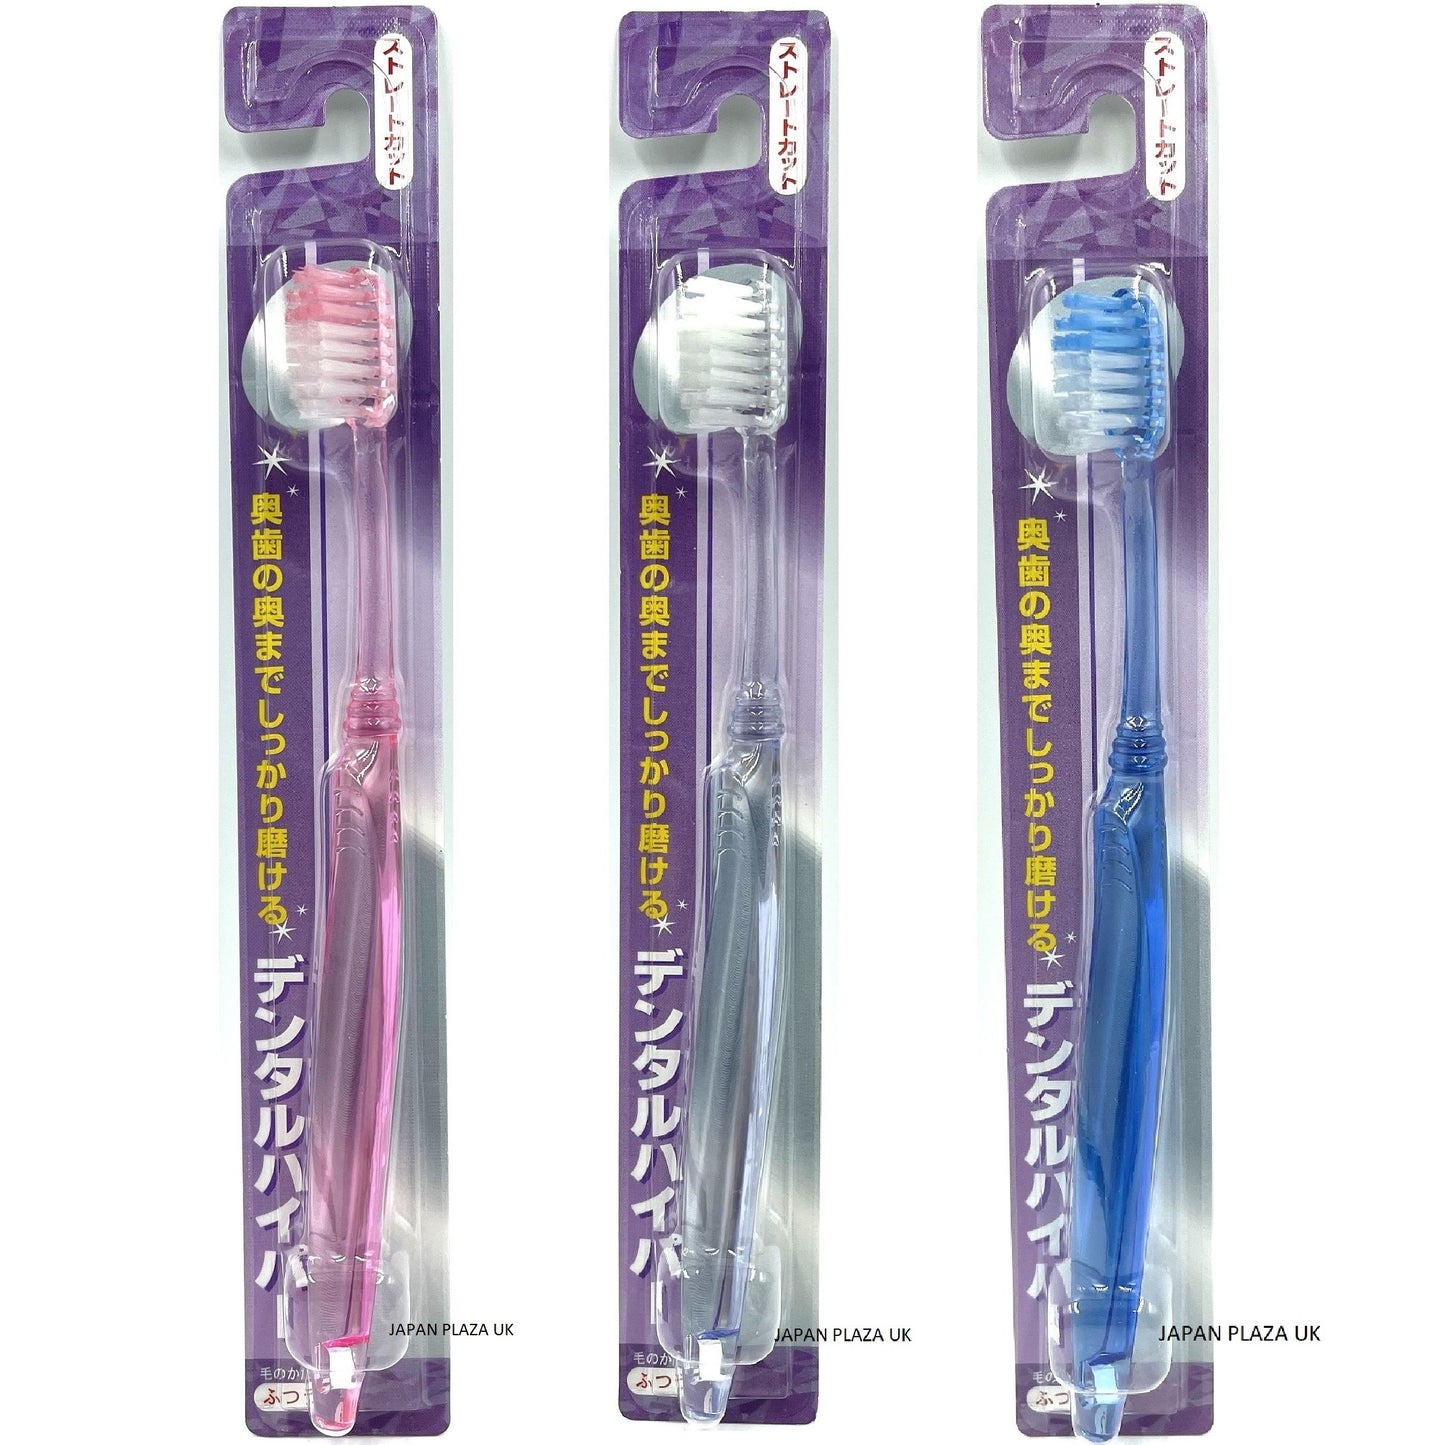 Toothbrush Standard (Made in Japan)